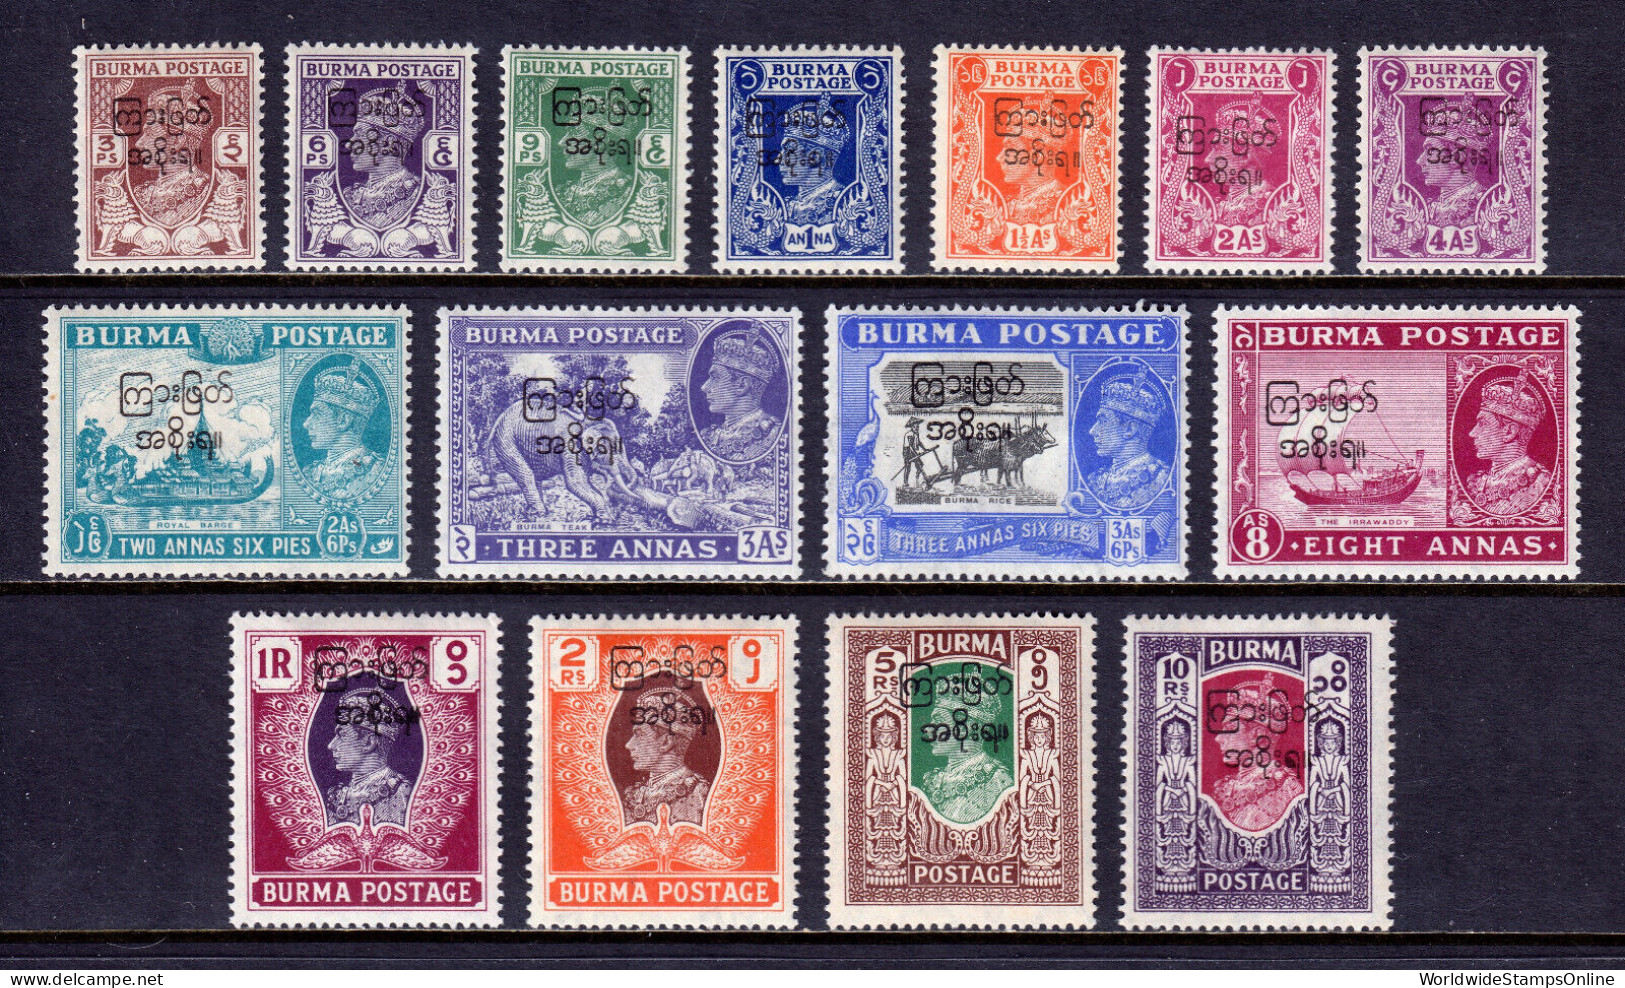 BURMA — SCOTT 70-84 — 1947 KGVI INTERIM GOVERNMENT OVPT. SET — MH — SCV $49 - Birmania (...-1947)